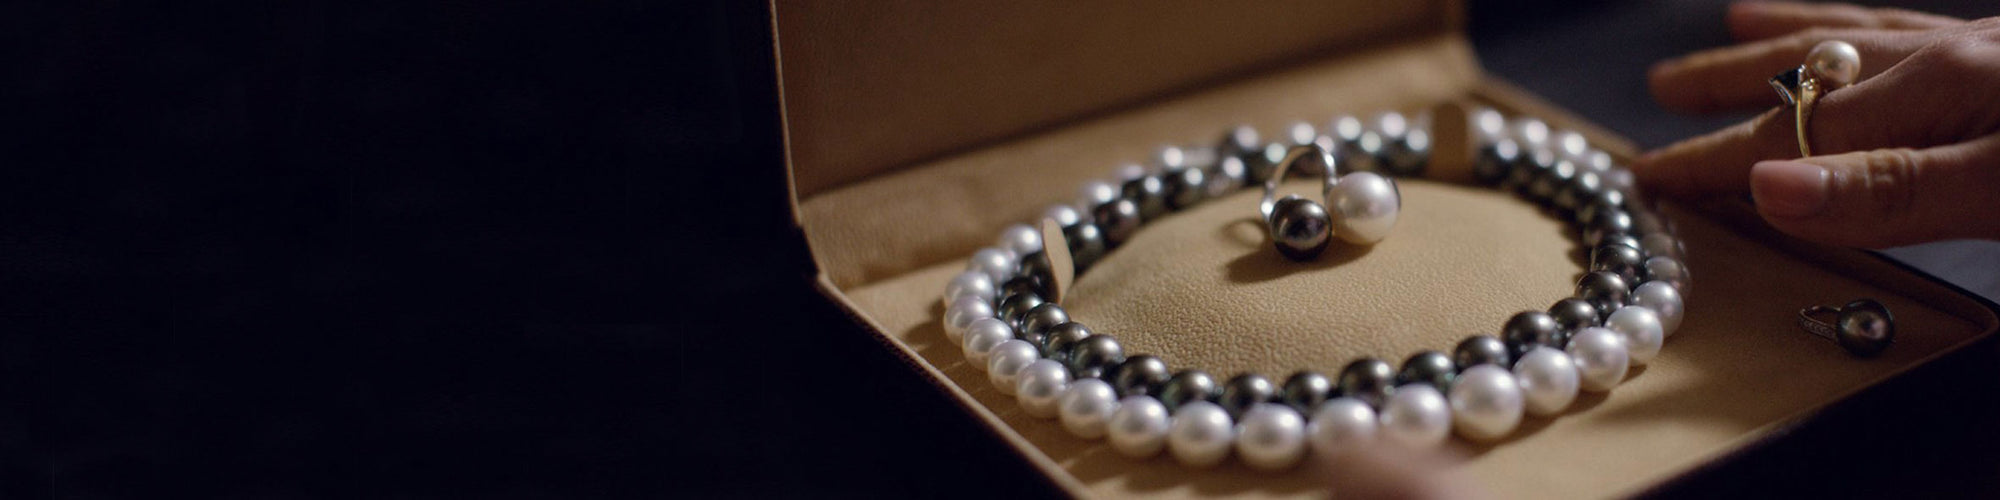 Buy pearl necklaces online UK